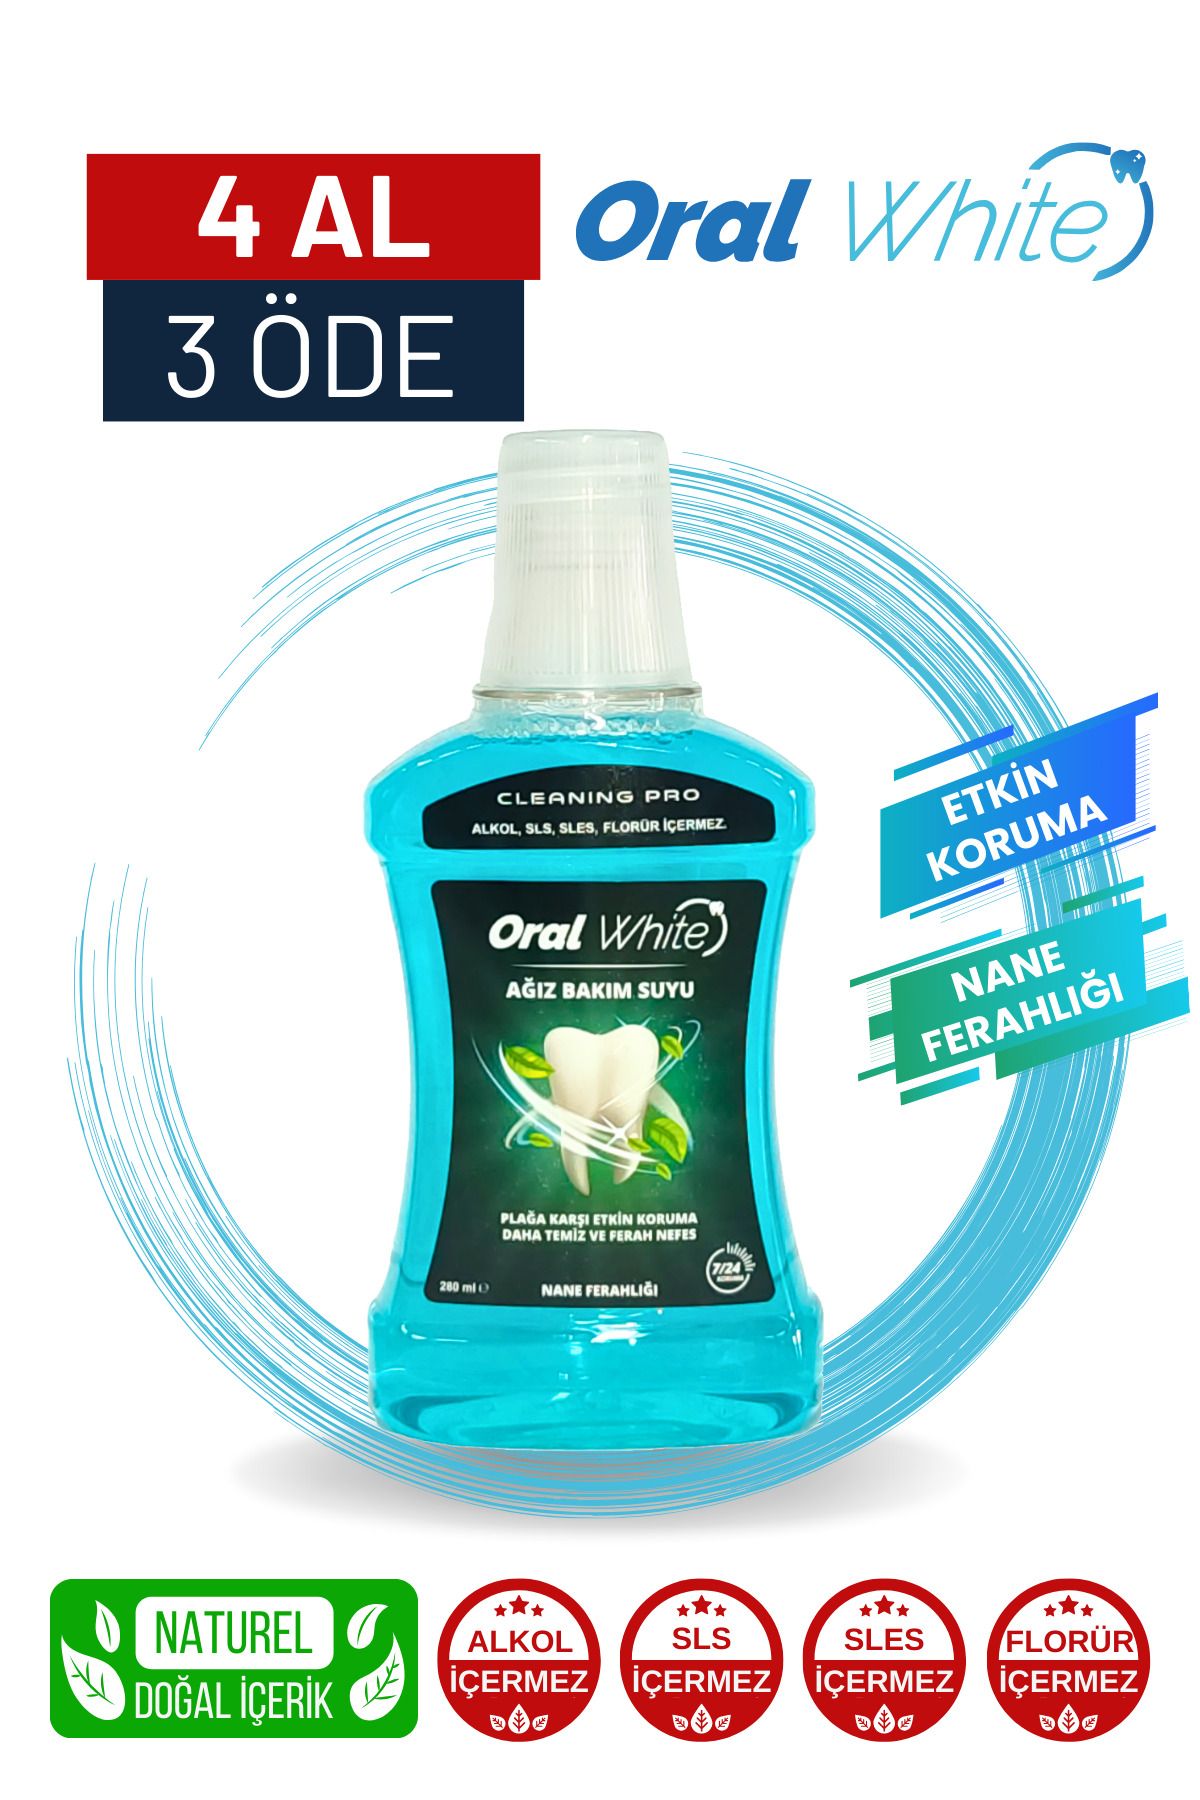 Oral White Cleaning Pro Ağız Bakım Suyu Nane Ferahlığı 280 ml Alkolsüz